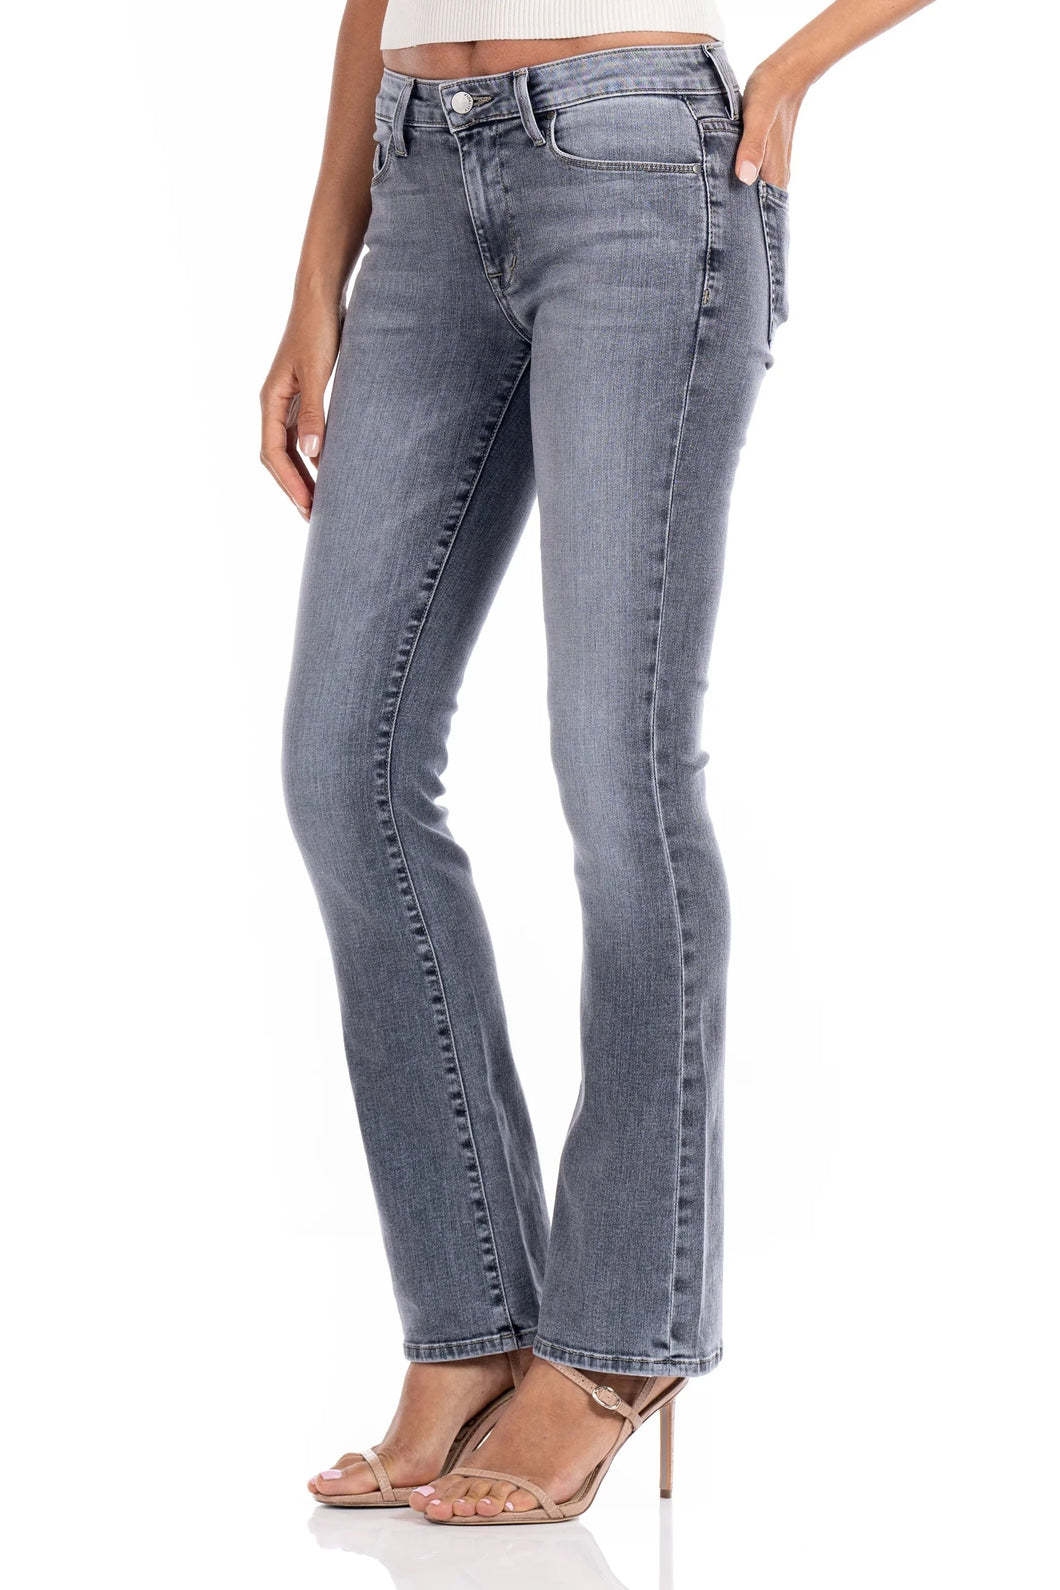 Fidelity Denim Belladonna Mid-Rise Bootcut Jeans